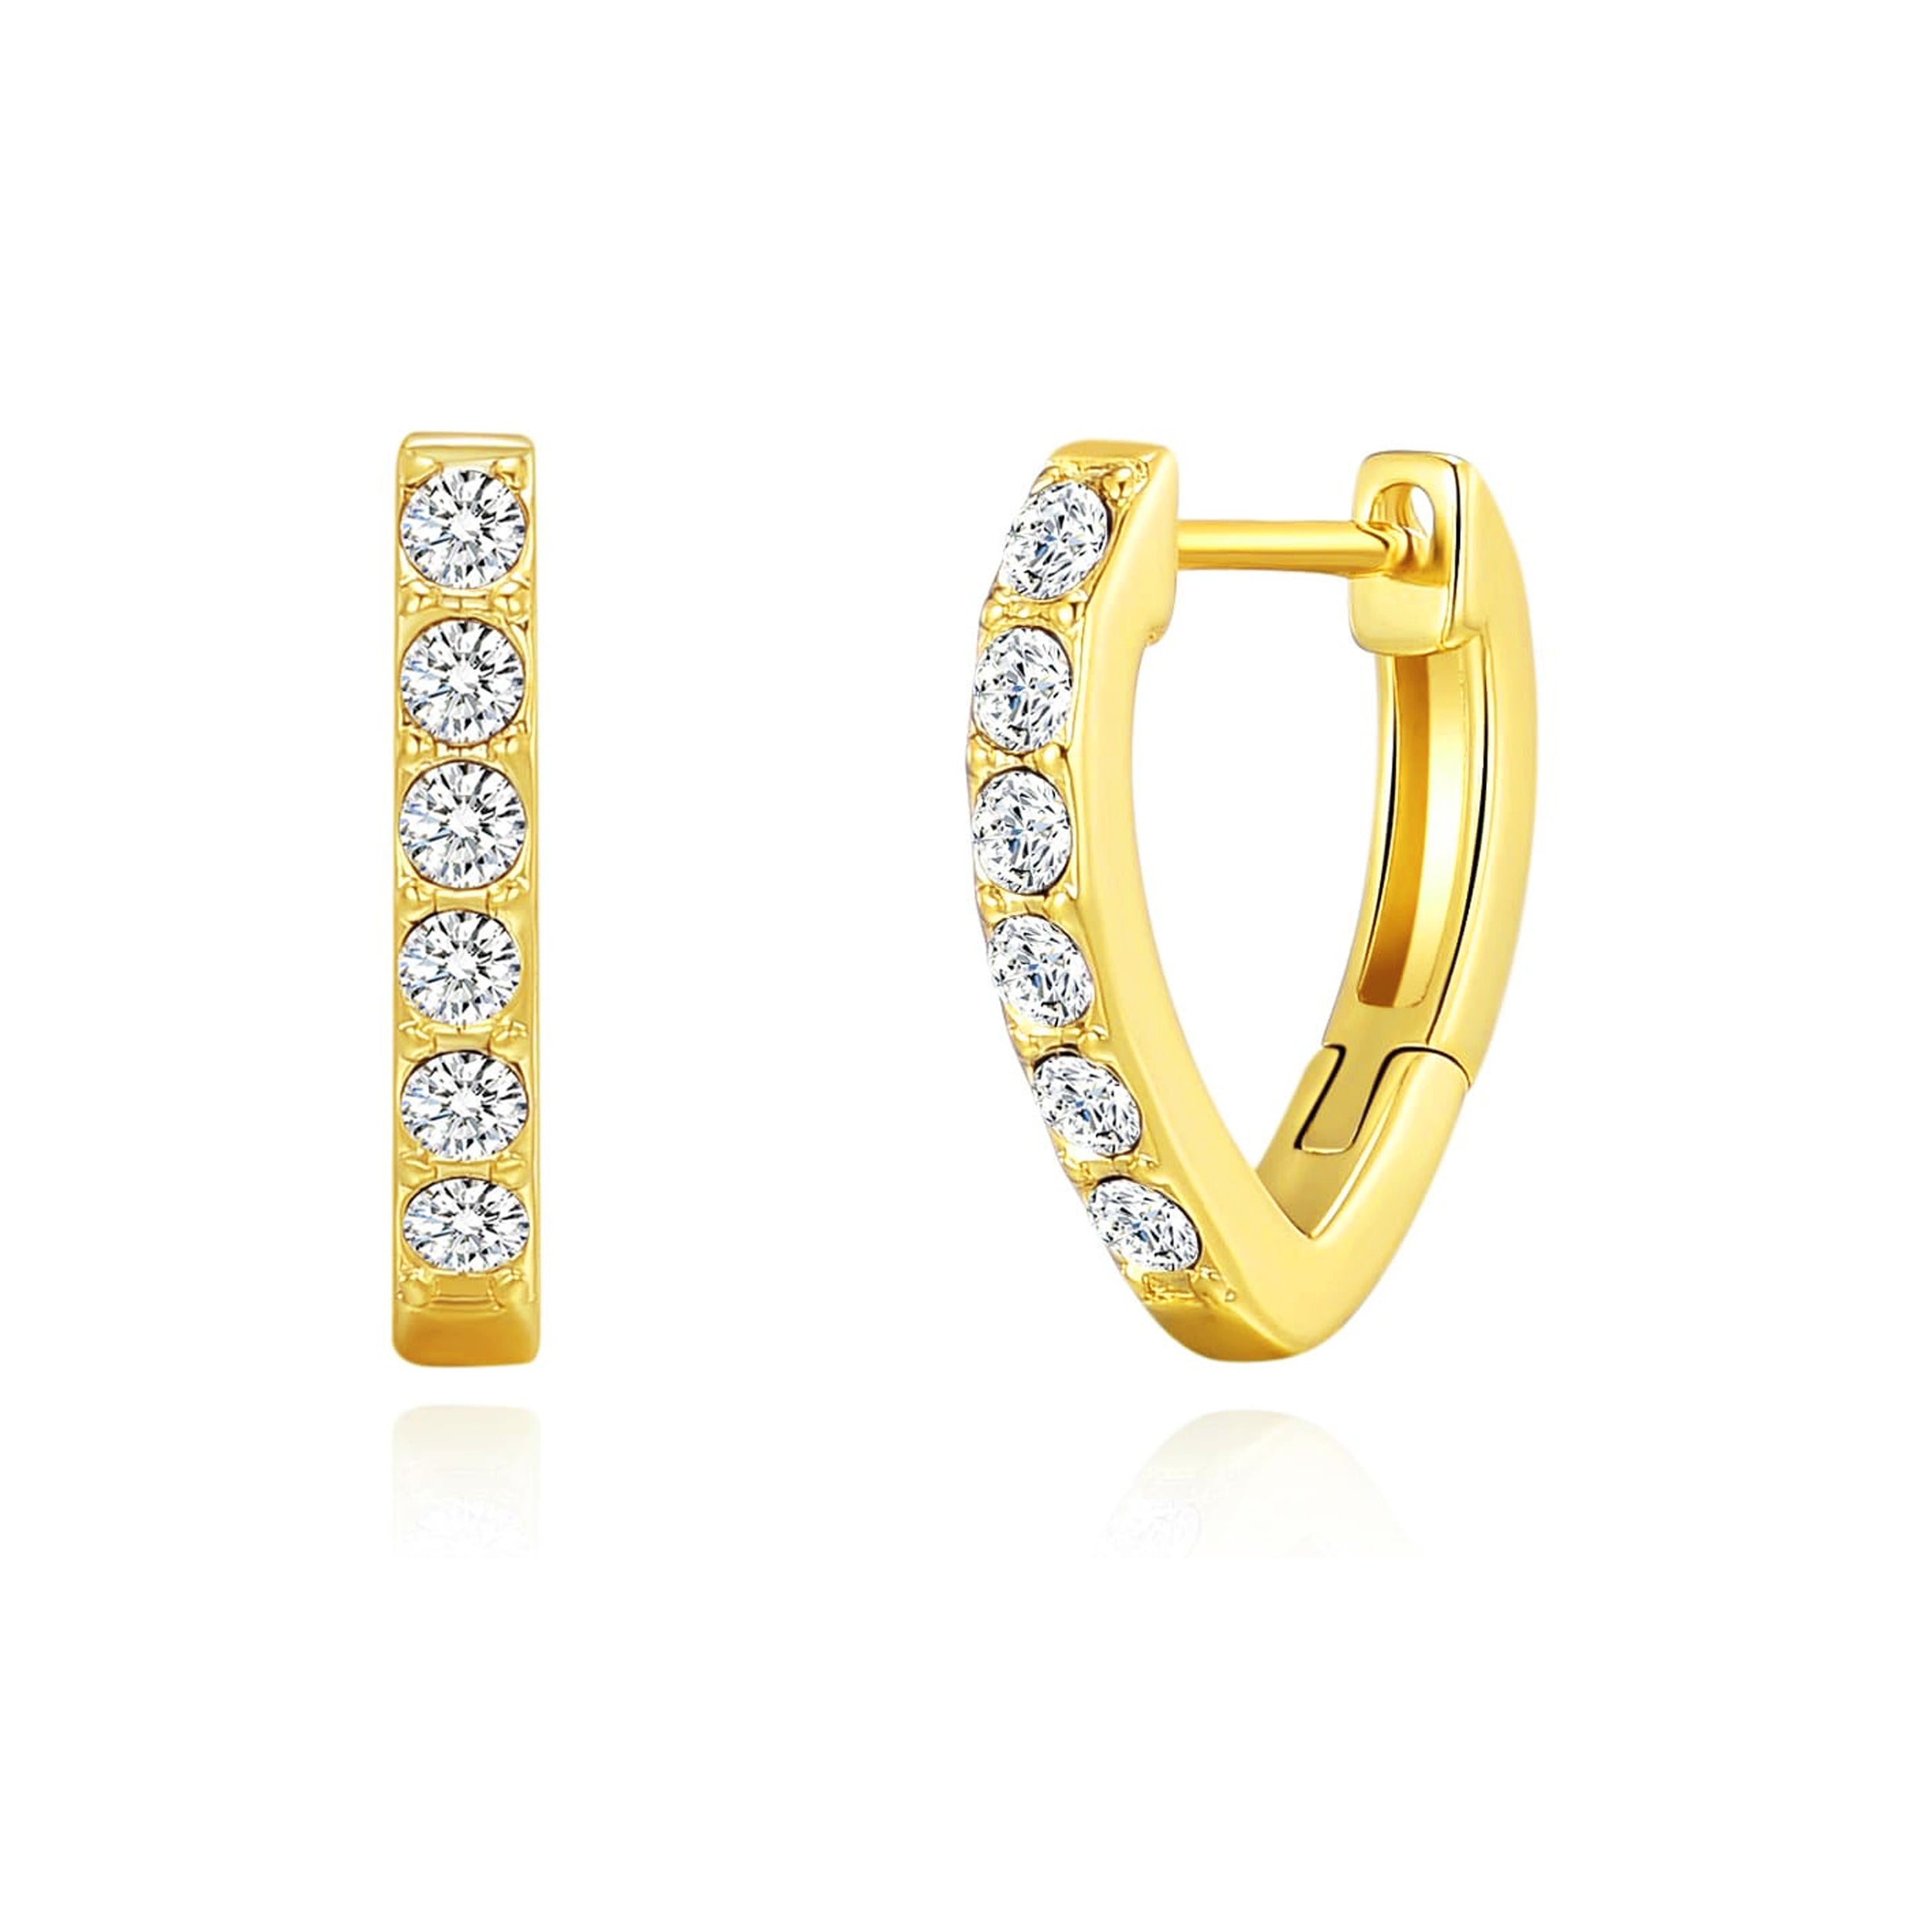 Gold Plated Huggie Hoop Earrings Created with Zircondia® Crystals